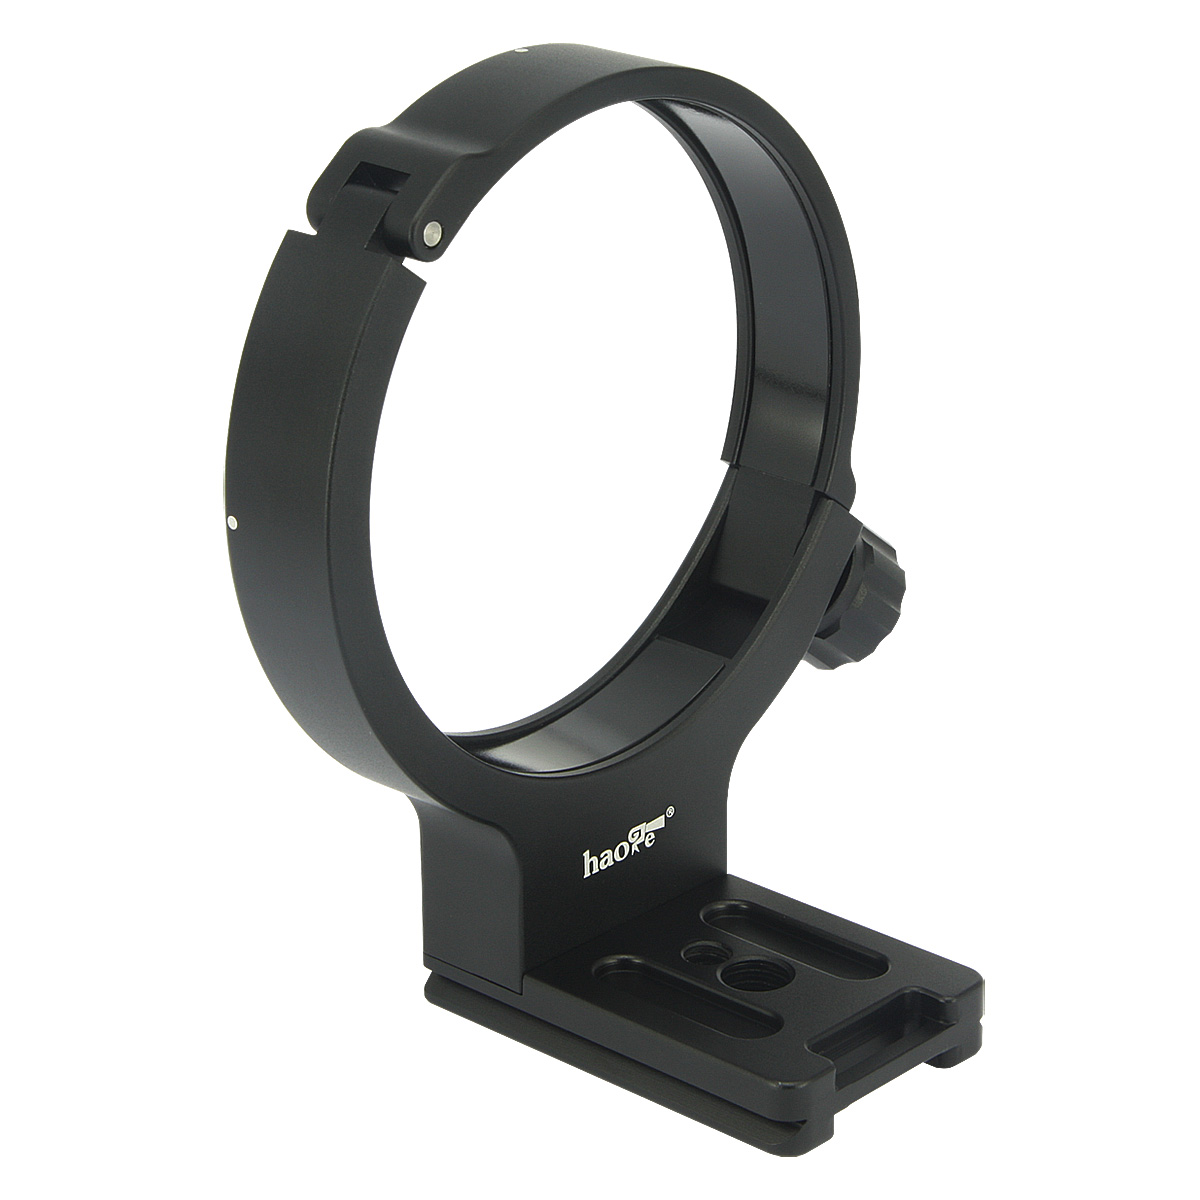 Tripod Mount Ring for Tamron 100-400mm f/4.5-6.3 Di VC USD A035 Lens